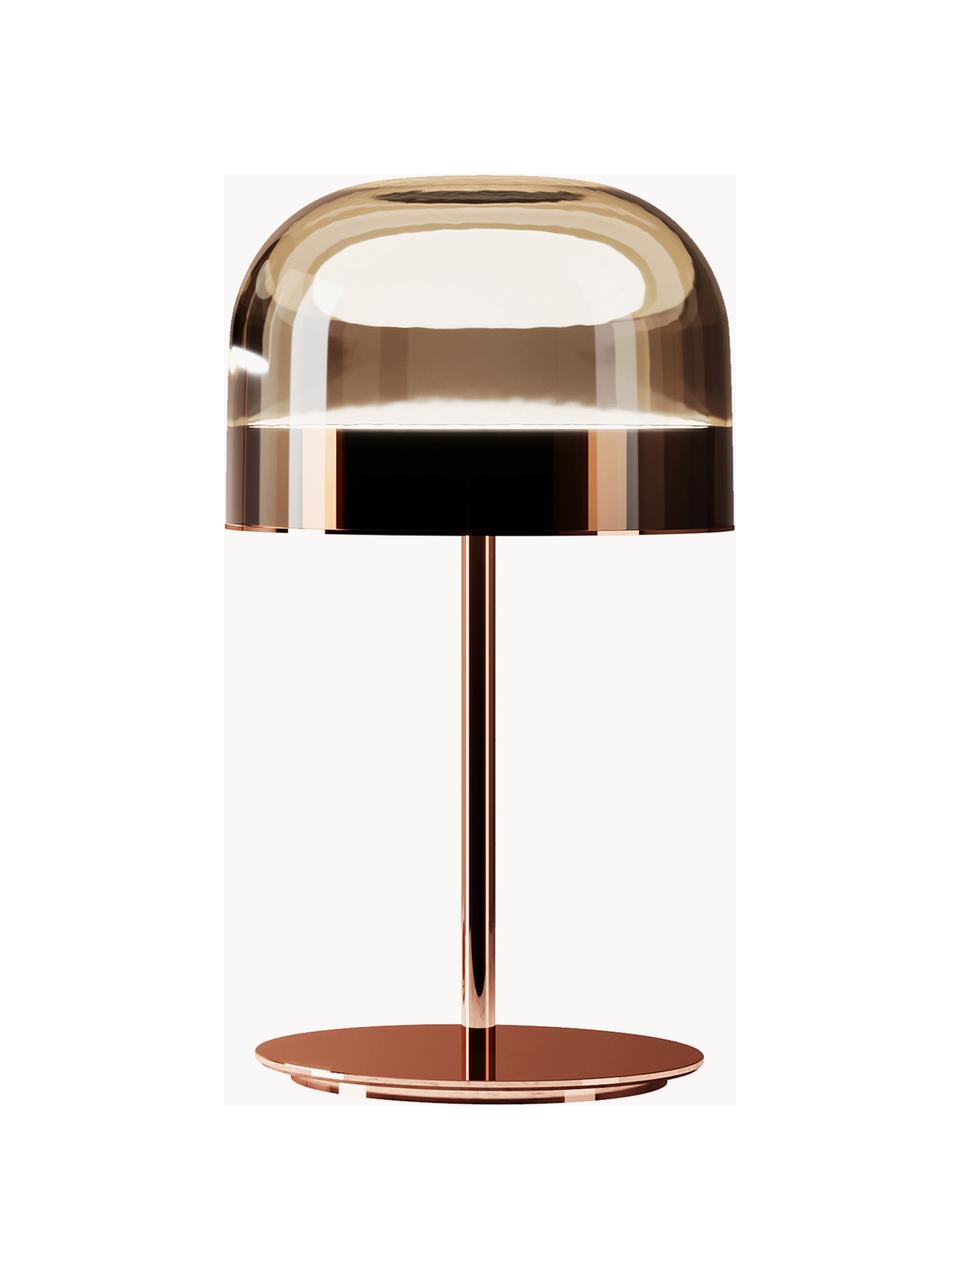 Handgemaakte LED tafellamp Equatore, Lampenkap: glas, gegalvaniseerd meta, Transparant, koperkleurig, Ø 24 x H 43 cm